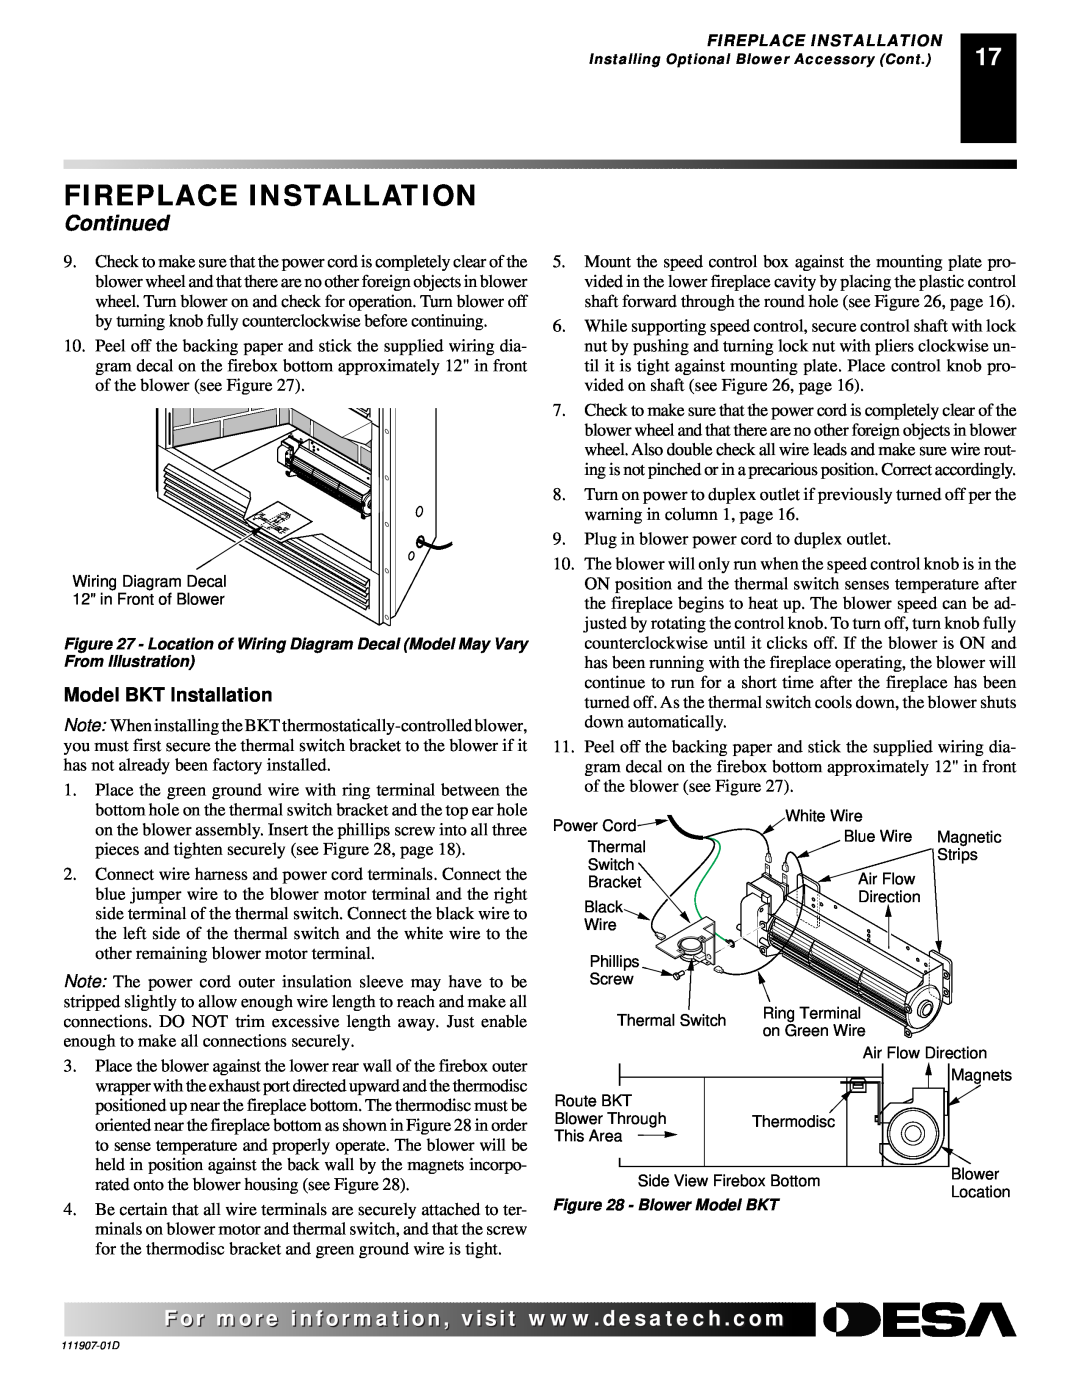 Desa VV42EPB(1), VV42ENB(1), V42EN-A, V42EP-A installation manual Fireplace Installation, Continued, Model BKT Installation 